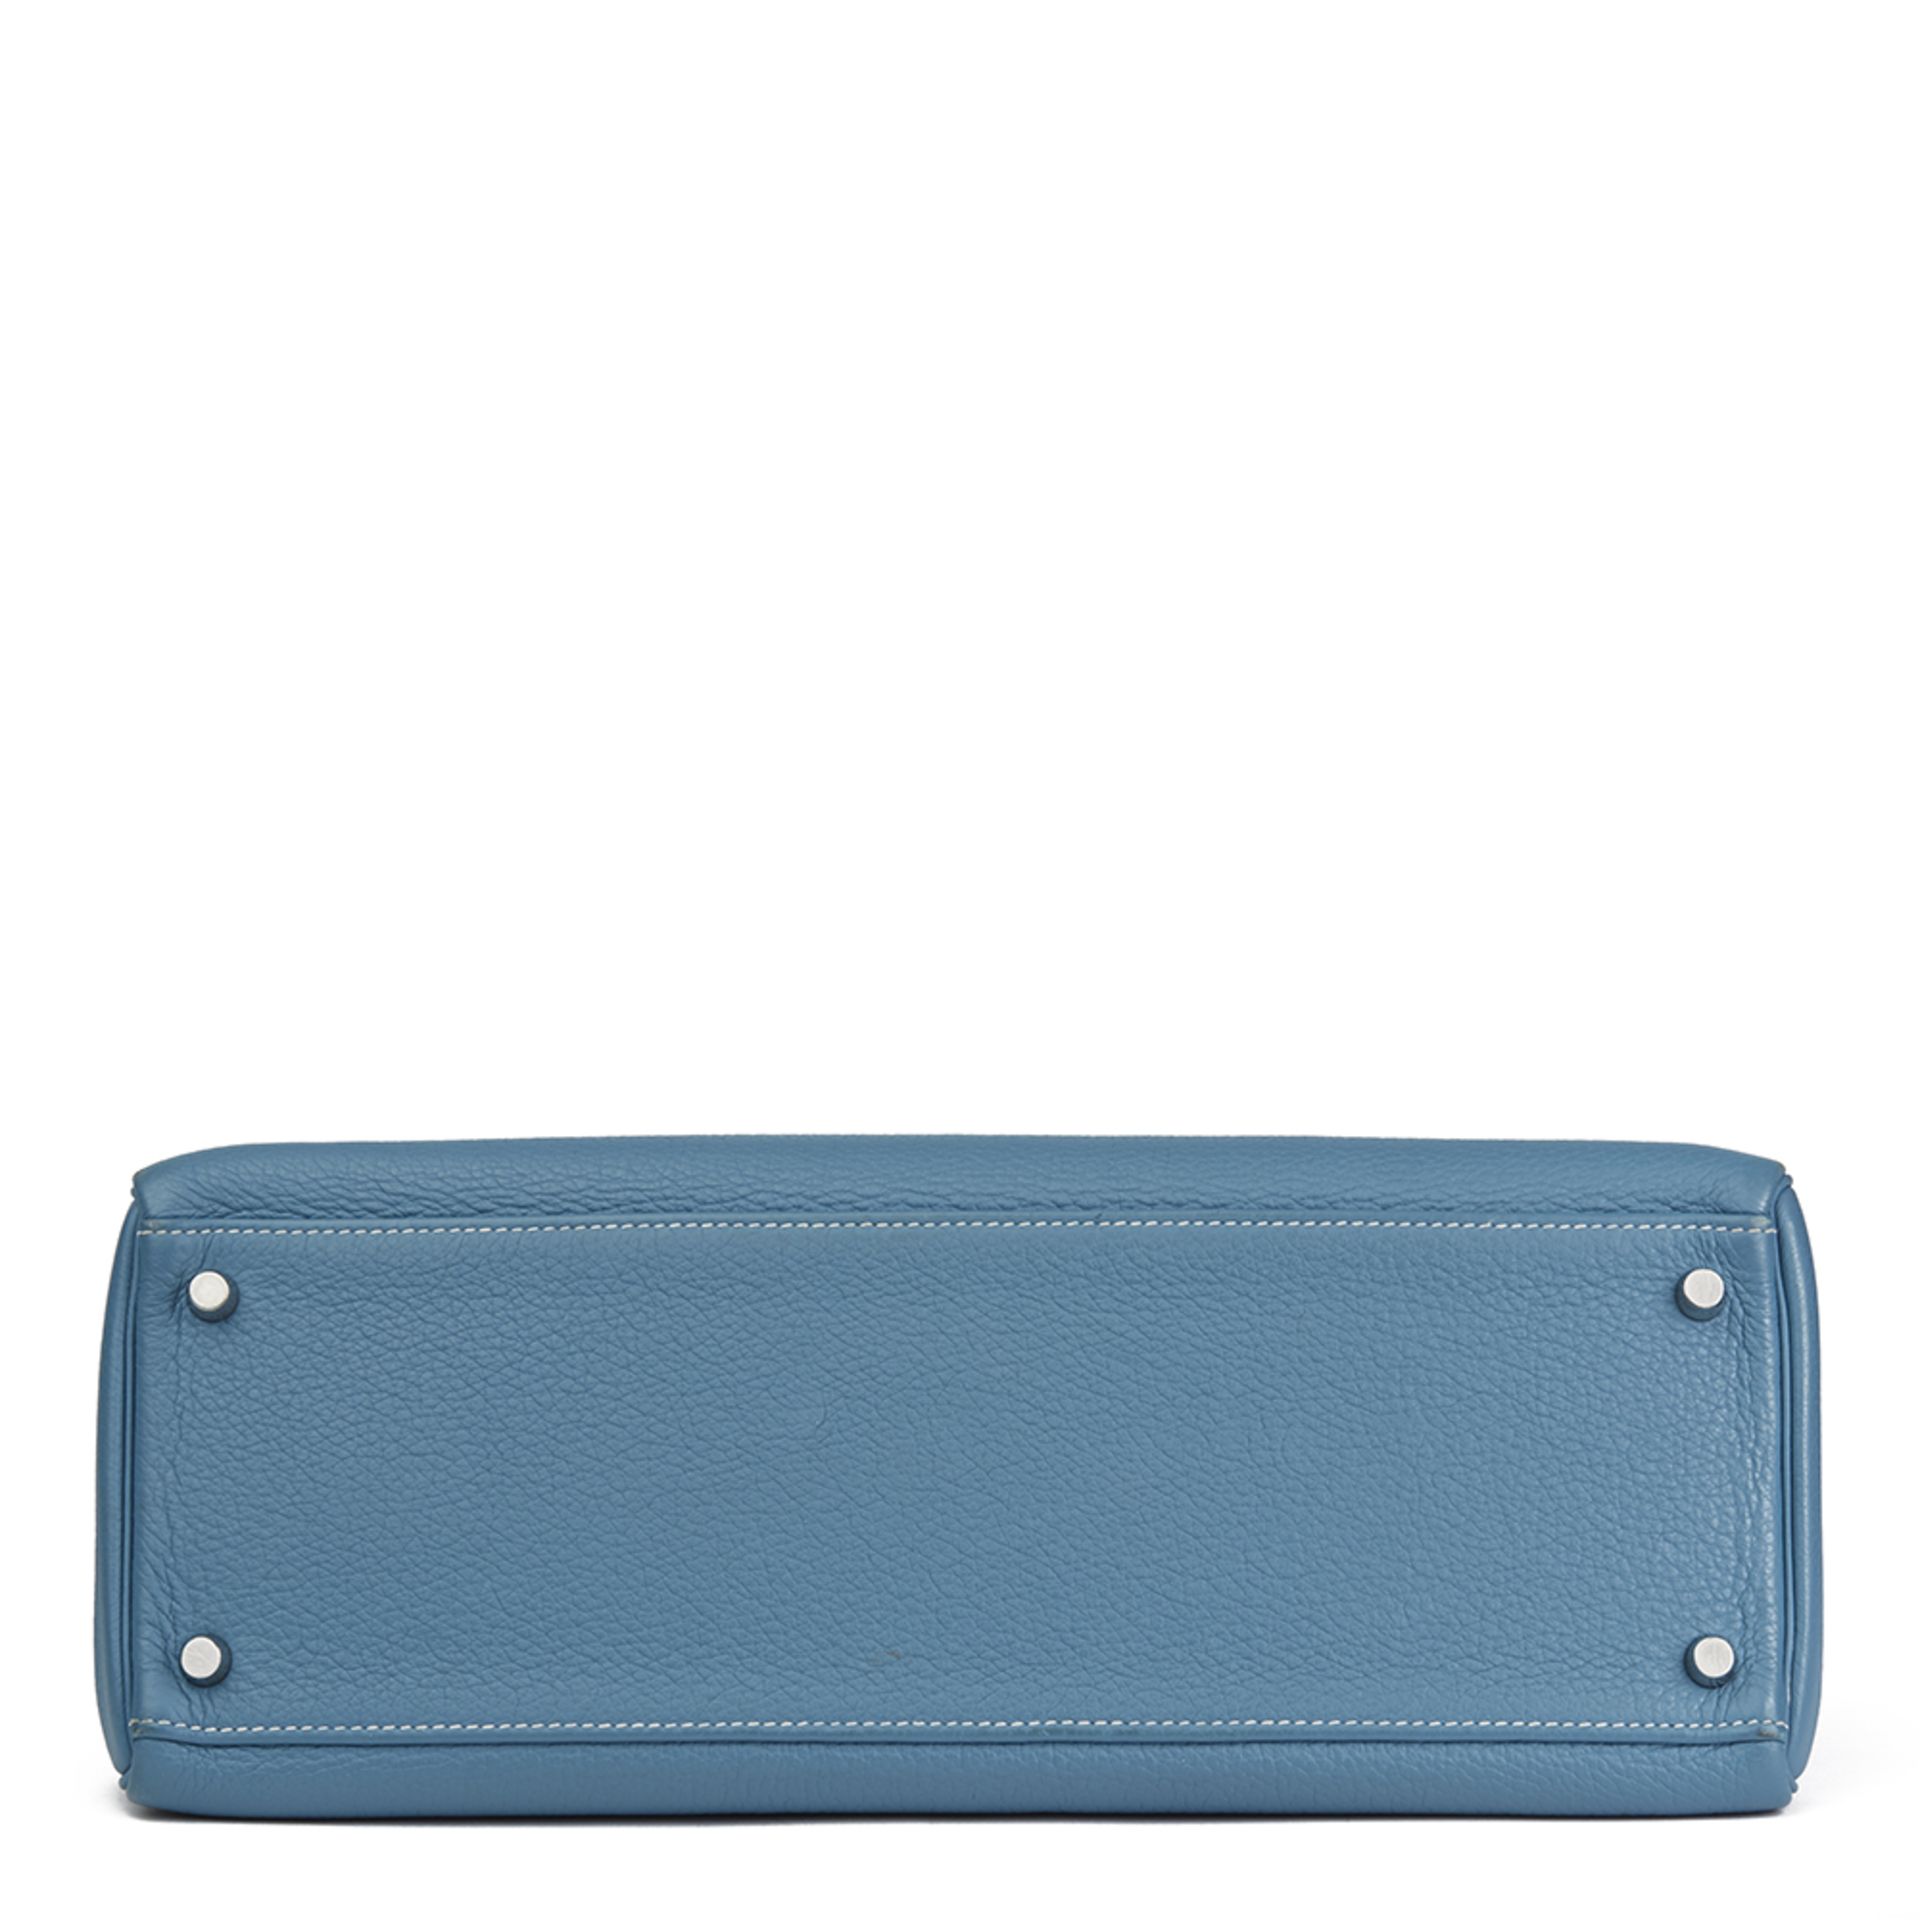 Hermès Blue Jean Togo Leather Kelly 35cm Retourne - Image 5 of 10